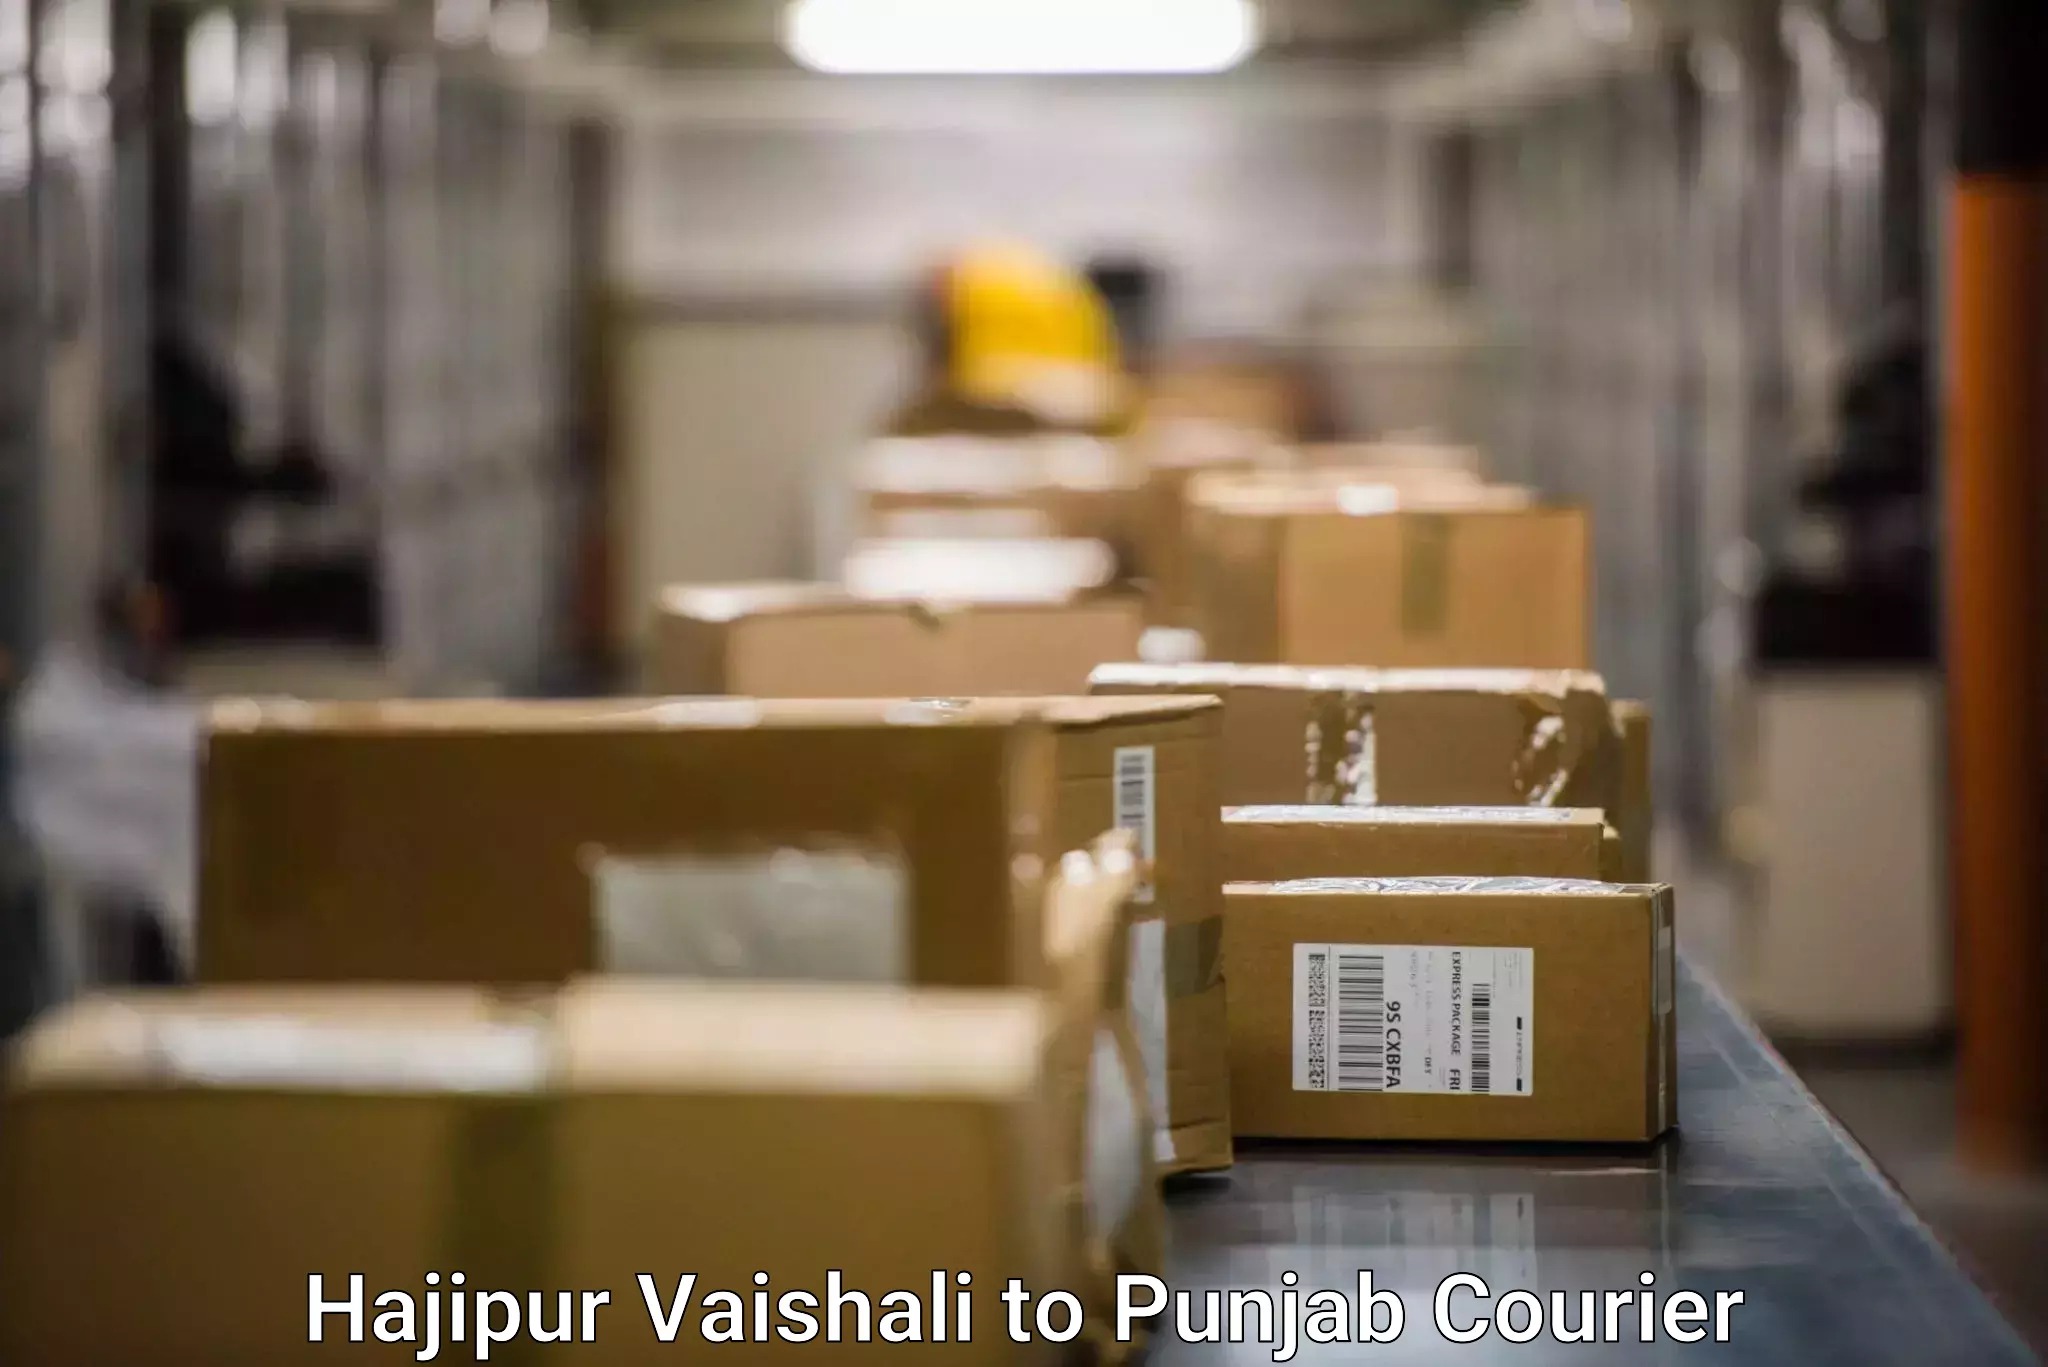 Global shipping networks Hajipur Vaishali to Punjab